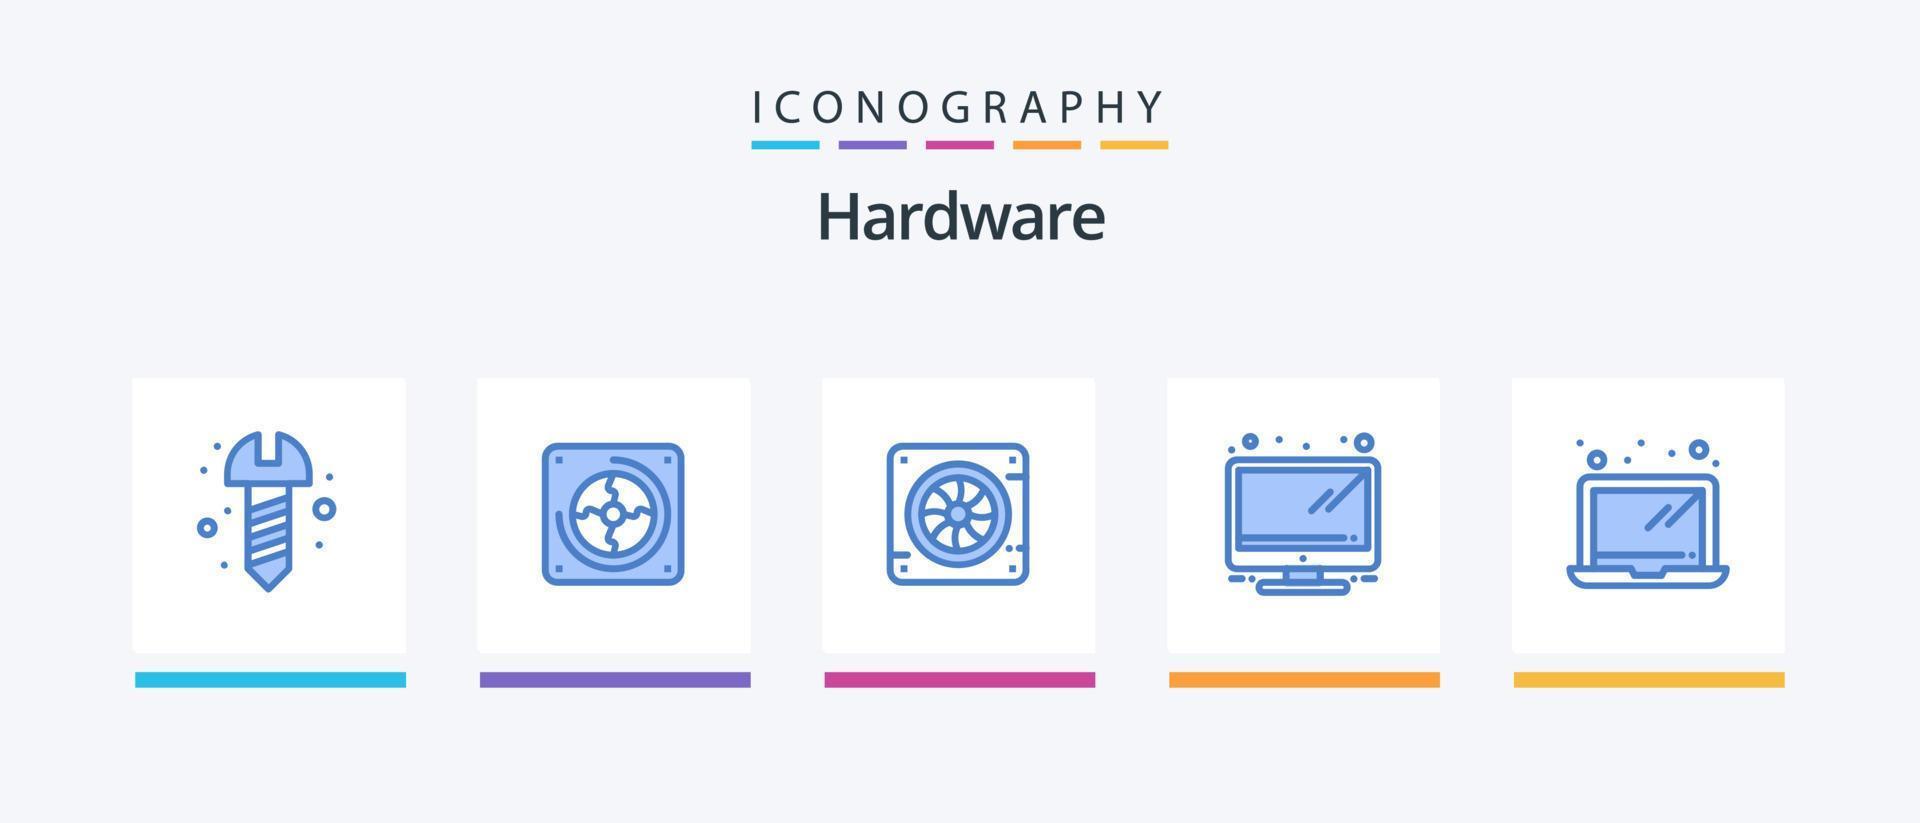 paquete de iconos de hardware azul 5 que incluye . hardware. enfriador. computadora. monitor. diseño de iconos creativos vector